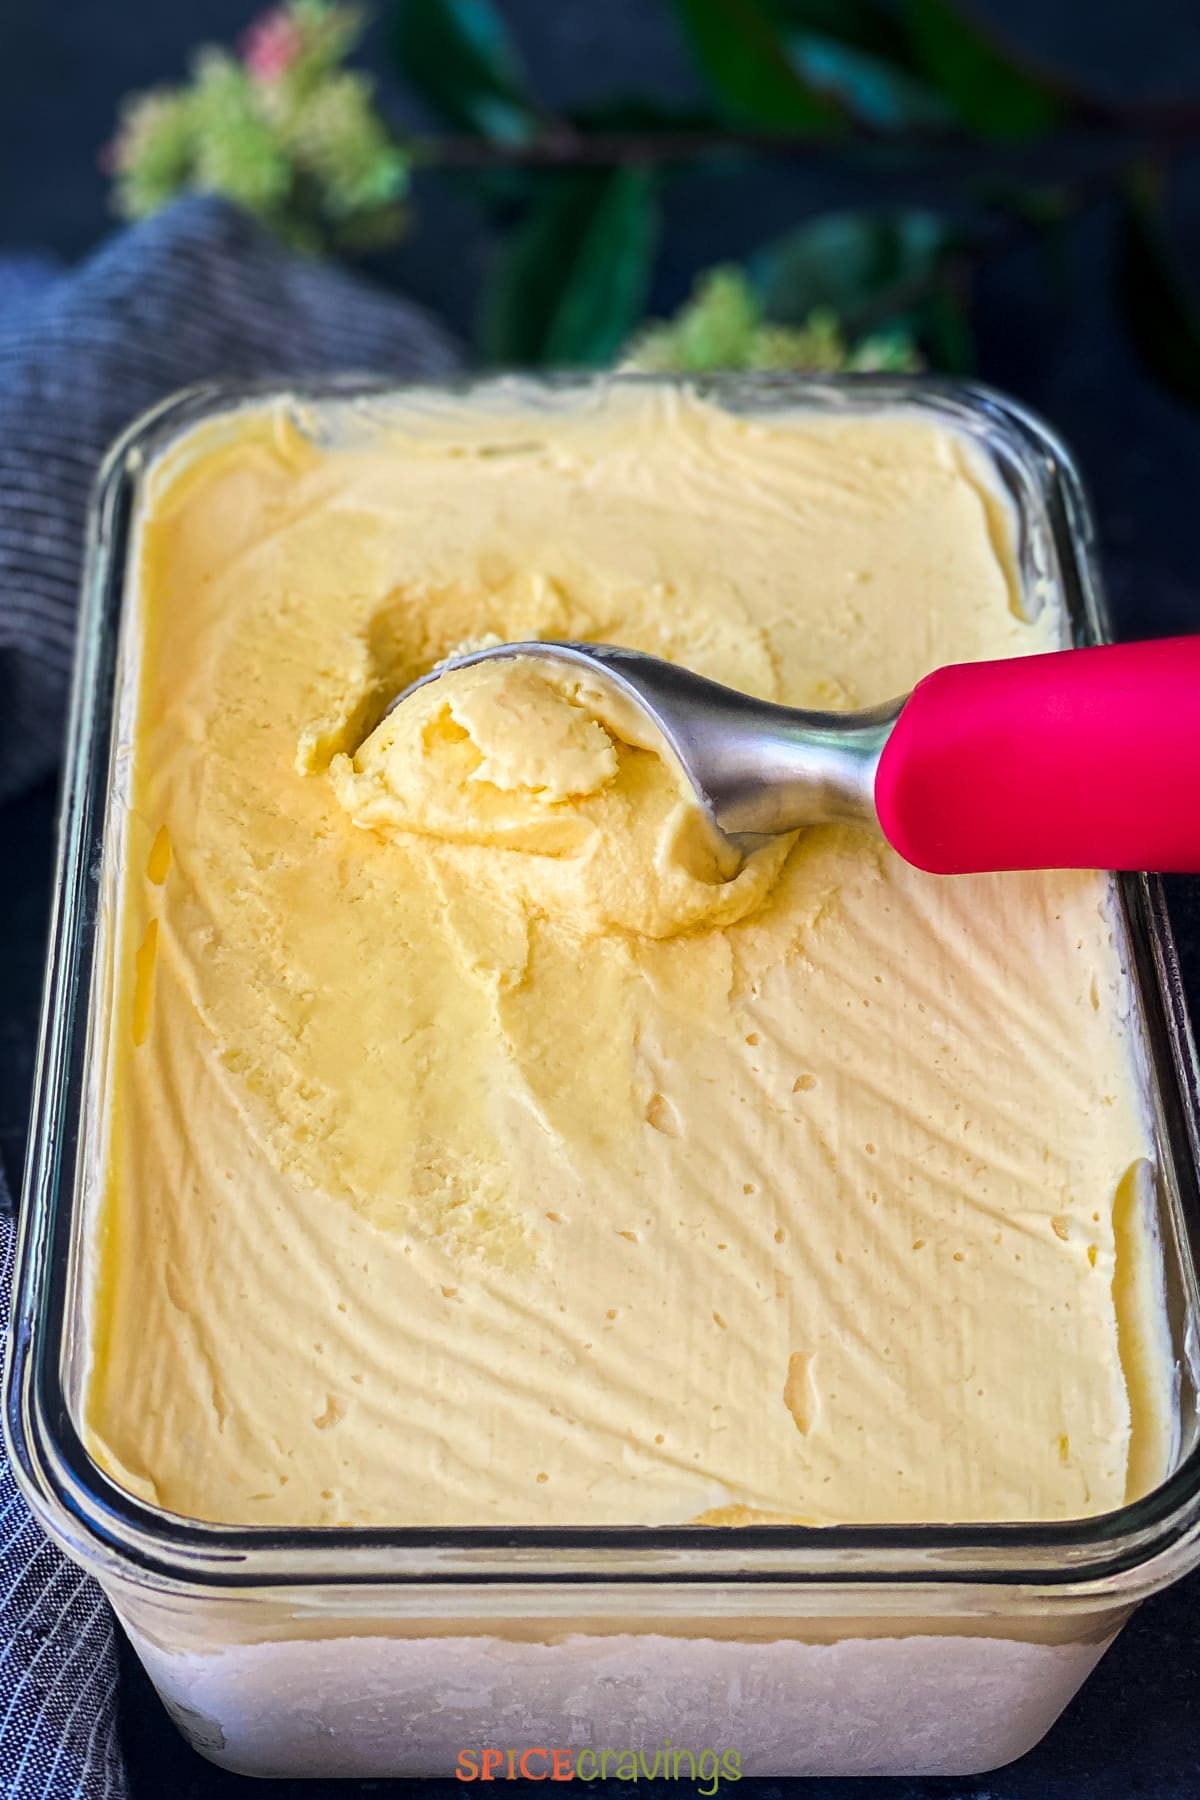 Red spoon scooping mango ice cream